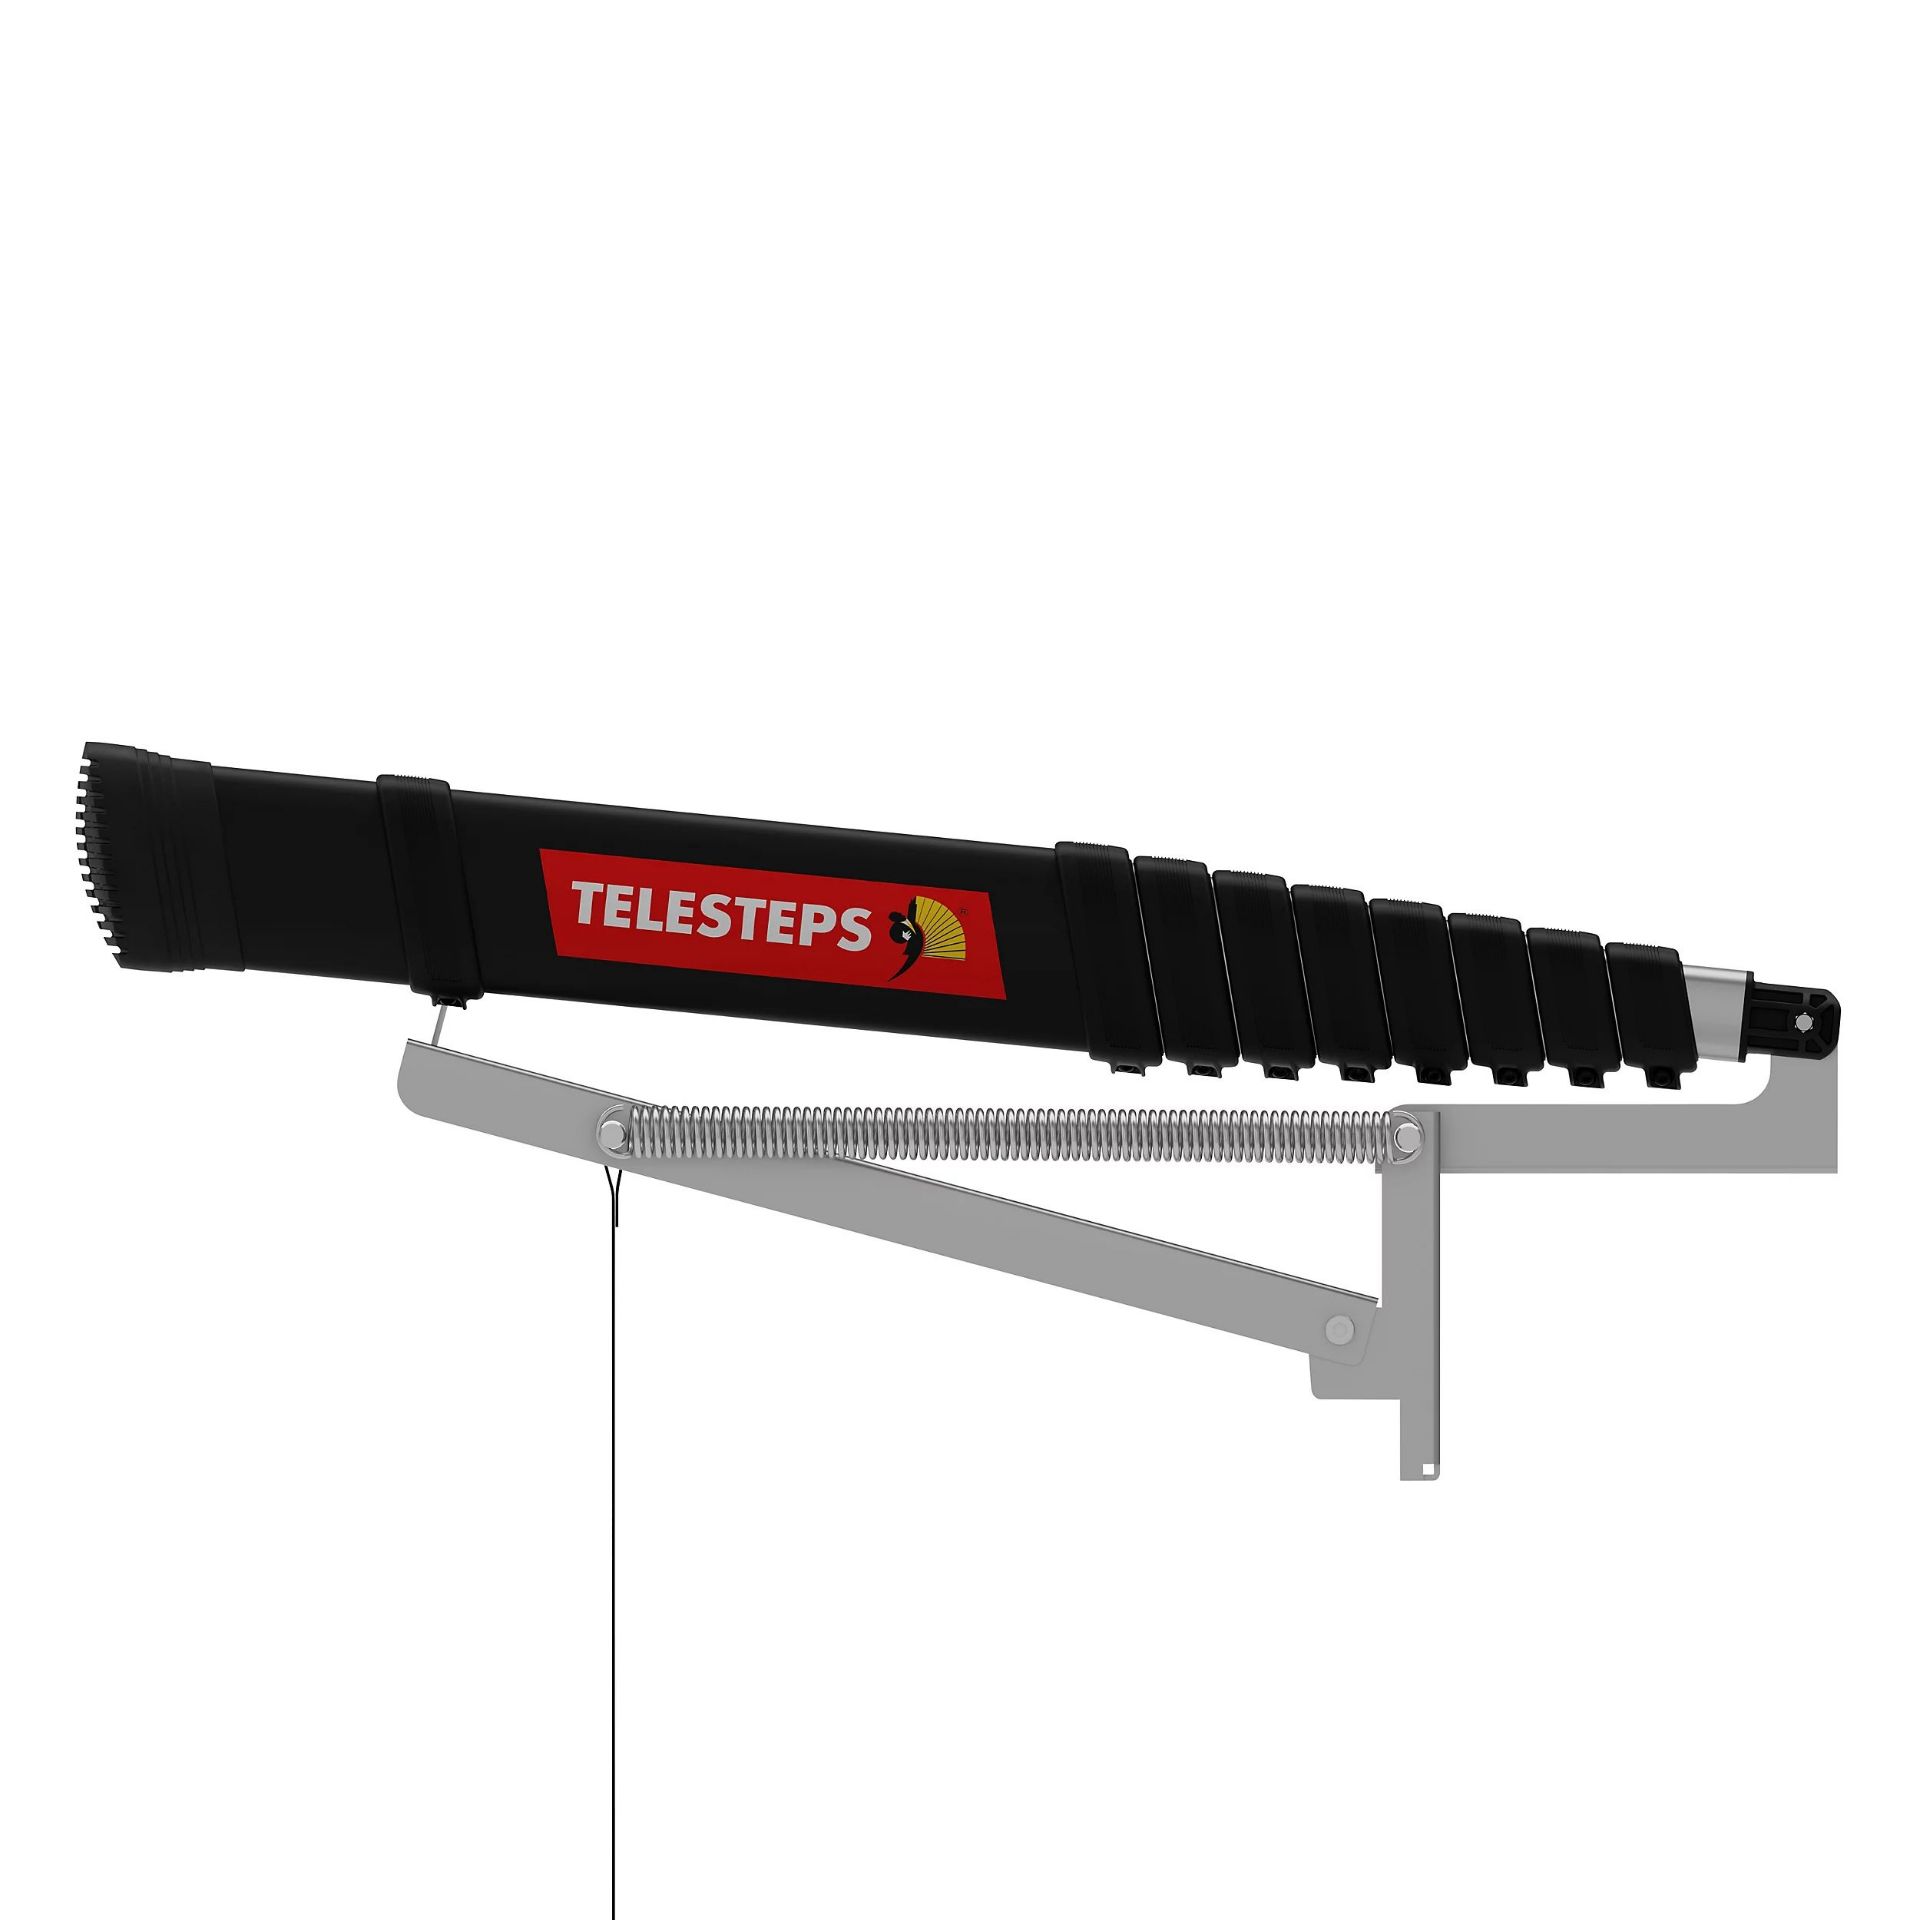 Brand New Telesteps Mini Loft Ladder - Triangular Profile 72324-541, With Telesteps simple lock - Image 2 of 3